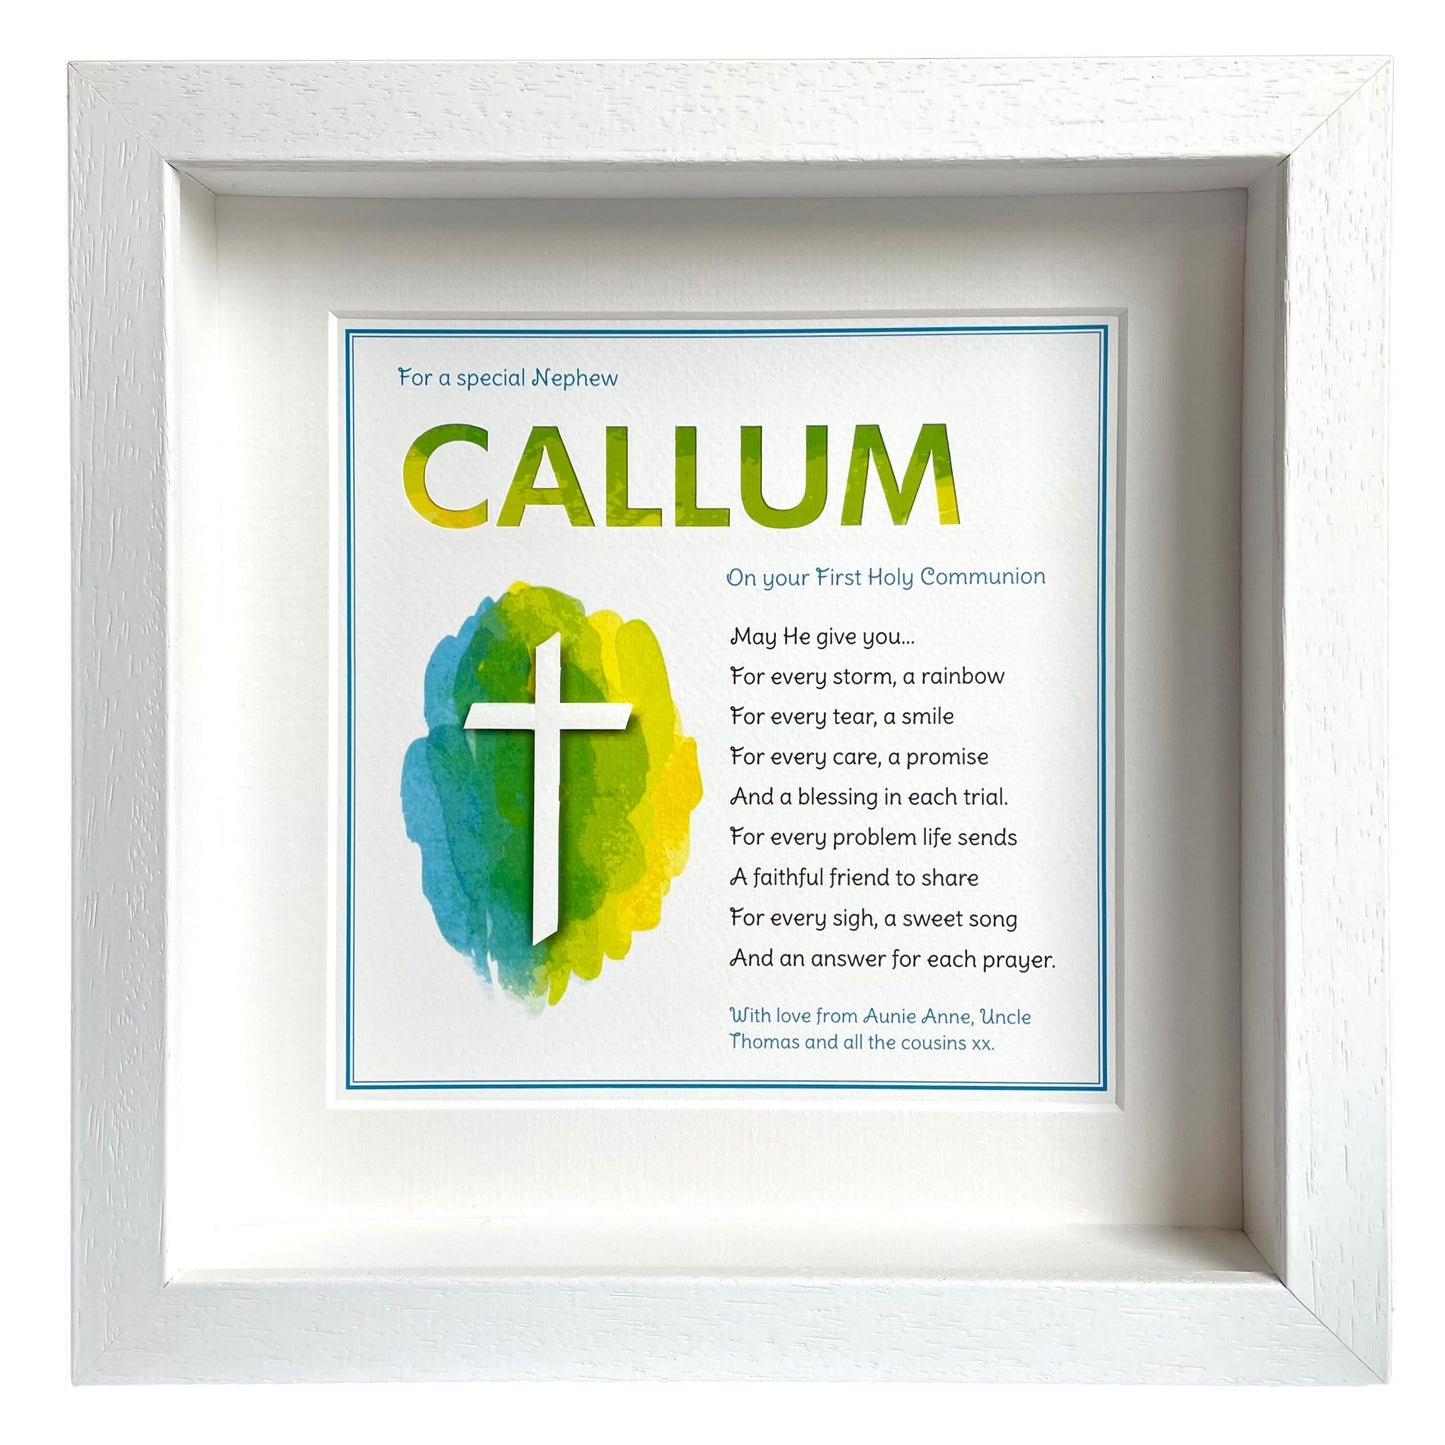 Handmade Communion Collection - "Callum"